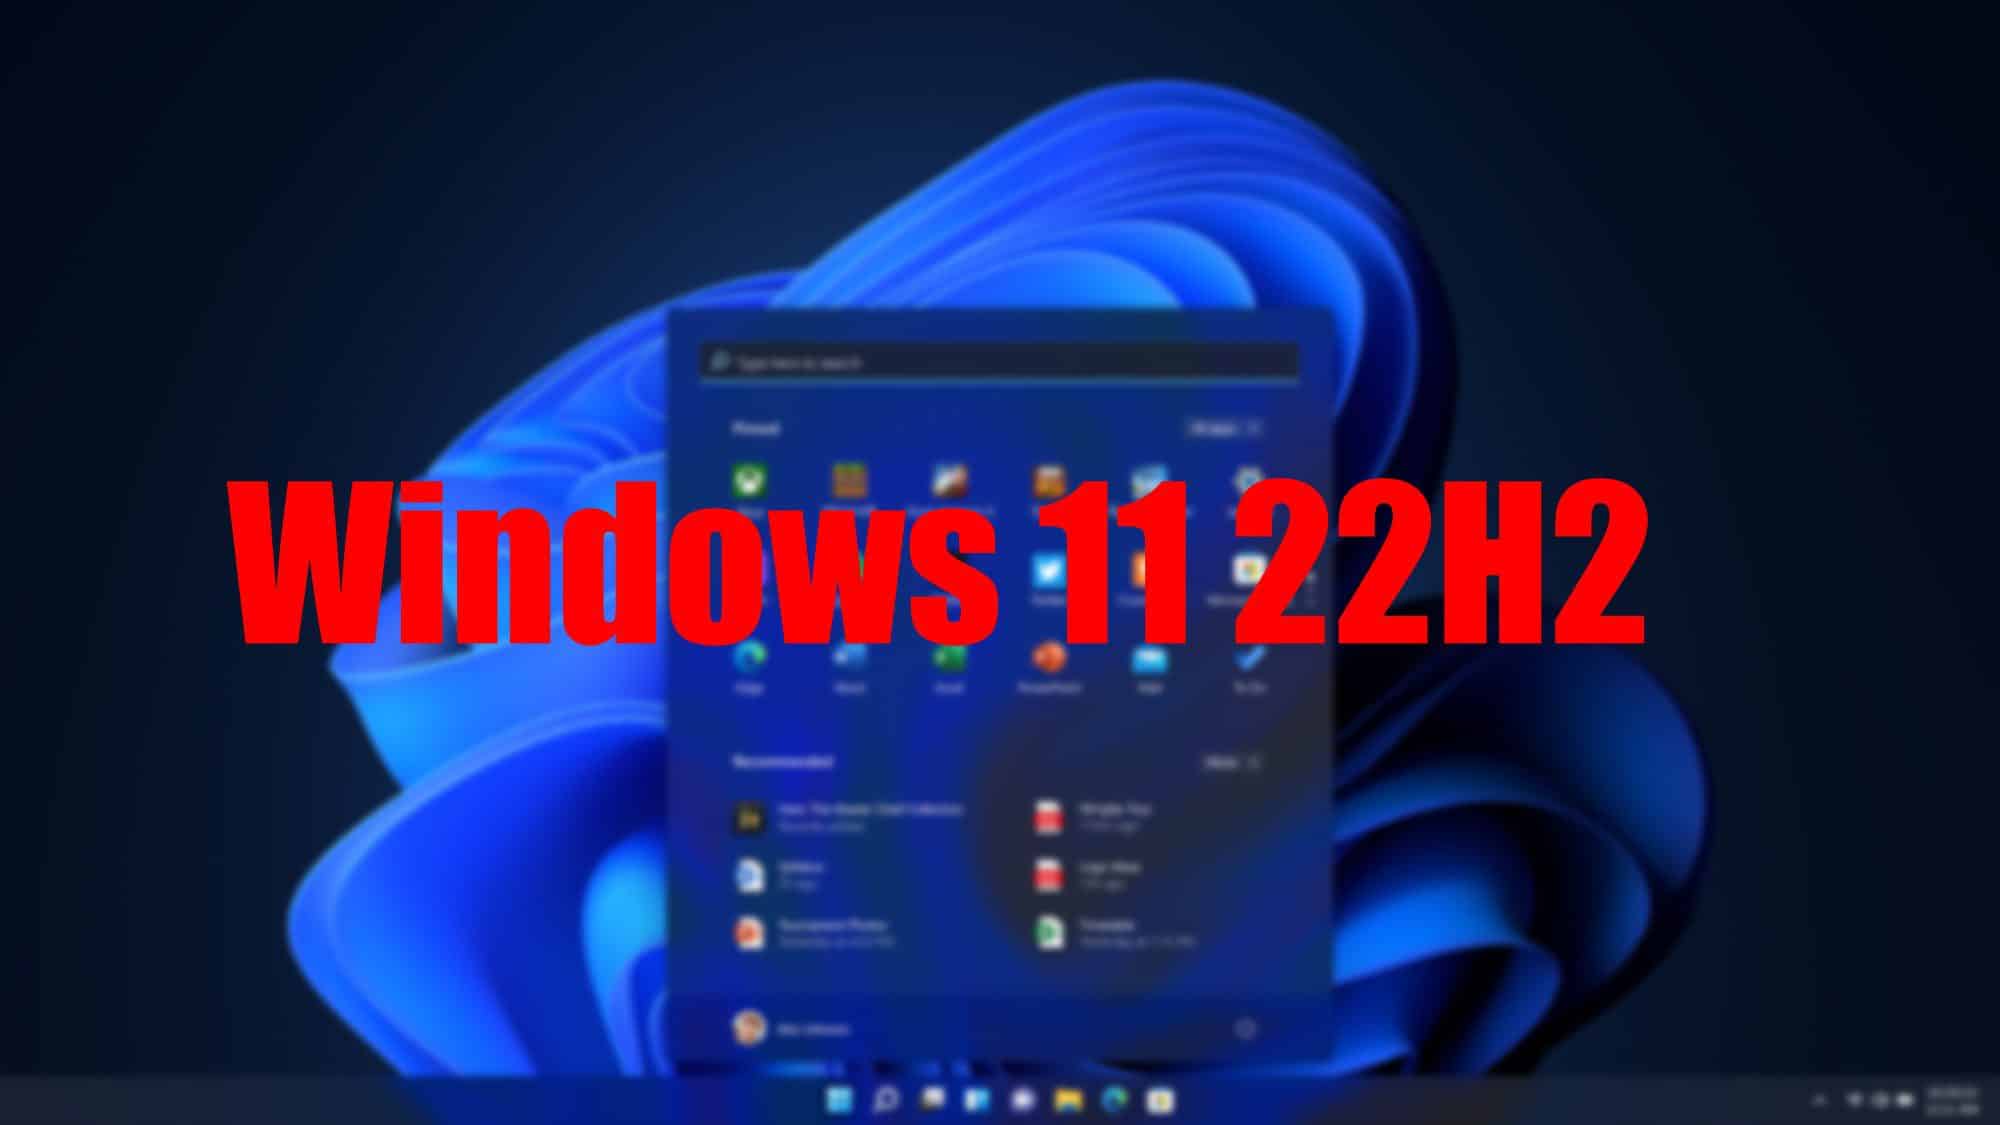 Windows Remote Desktop application stops responding in Windows 11 22H2? Microsoft working on a fix